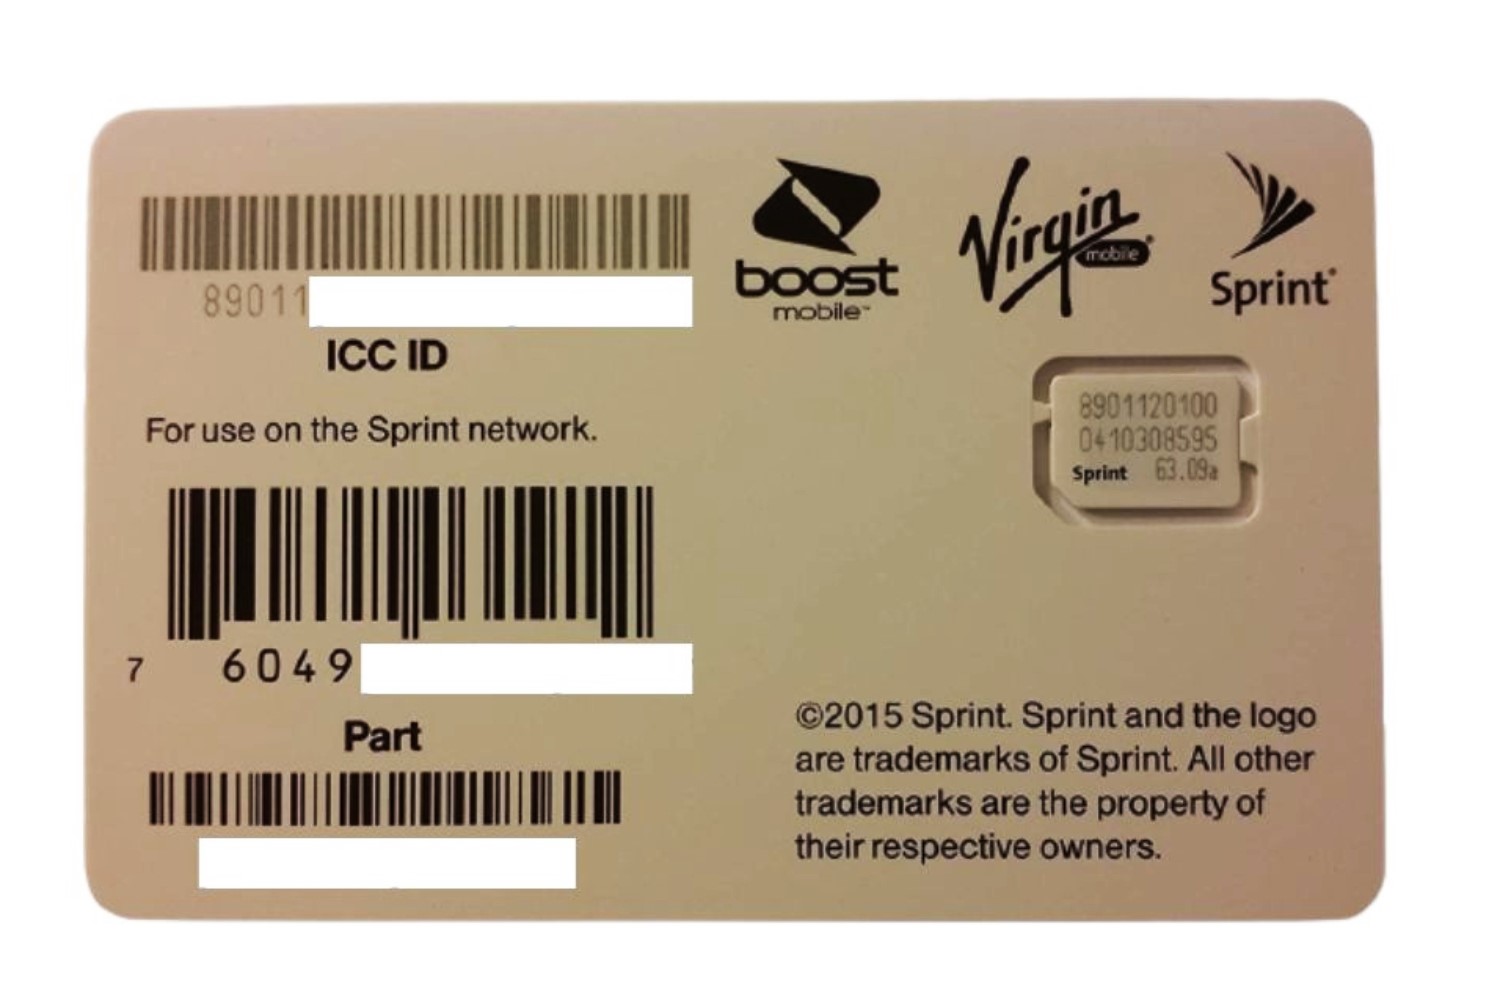 Locating ICCID On SIM Card: Important Information